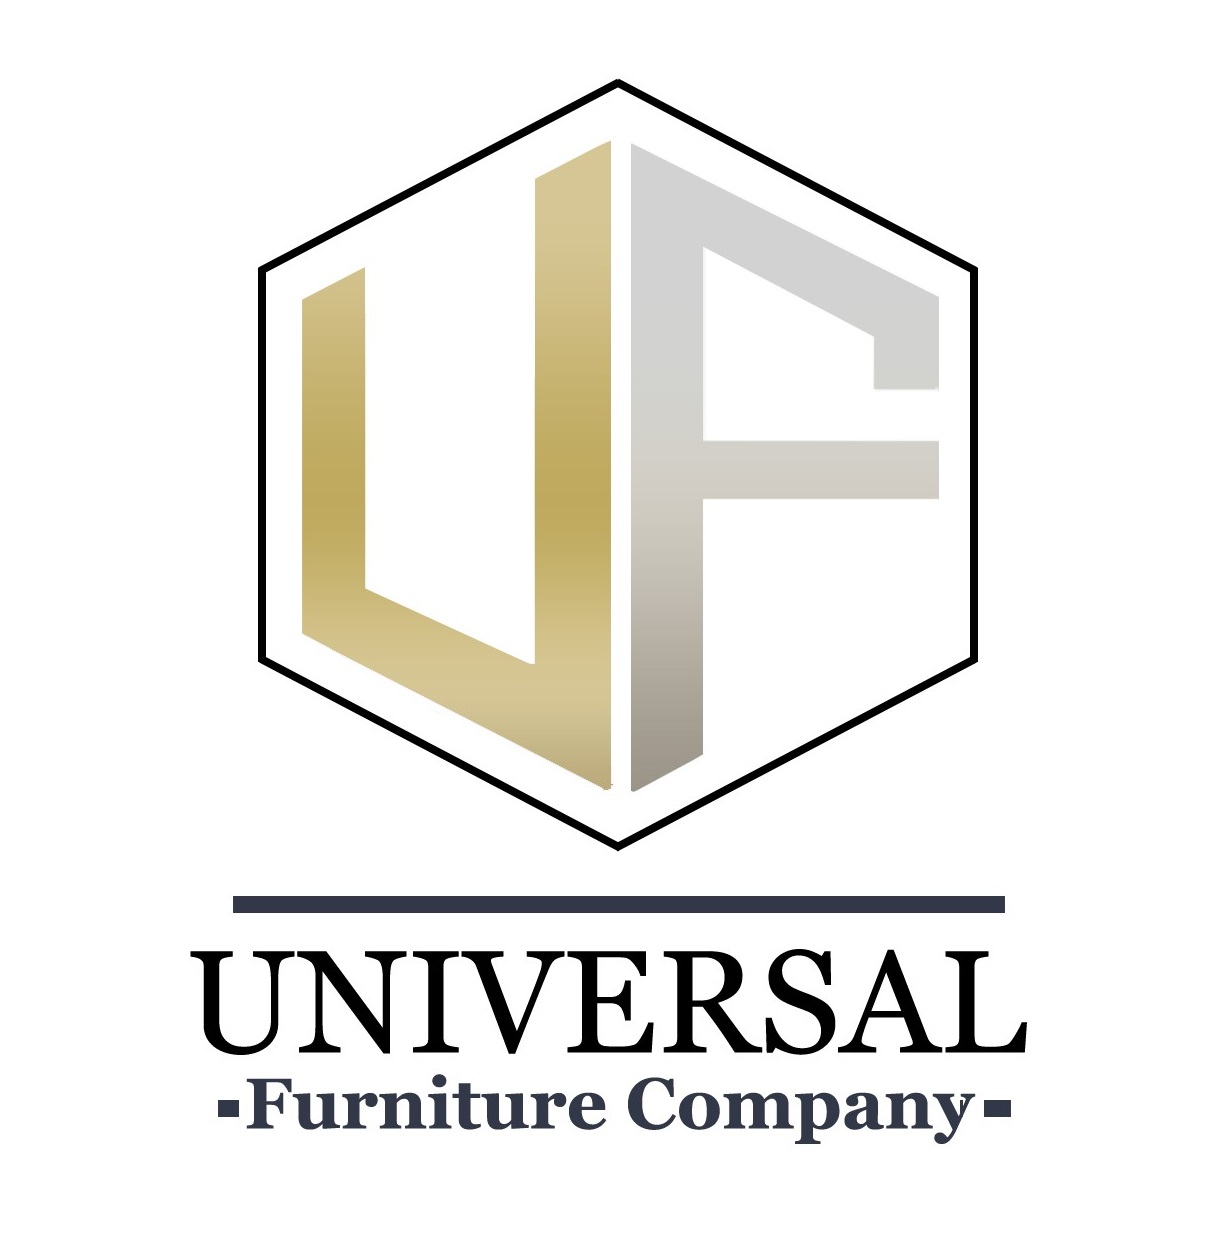 universal furniture company